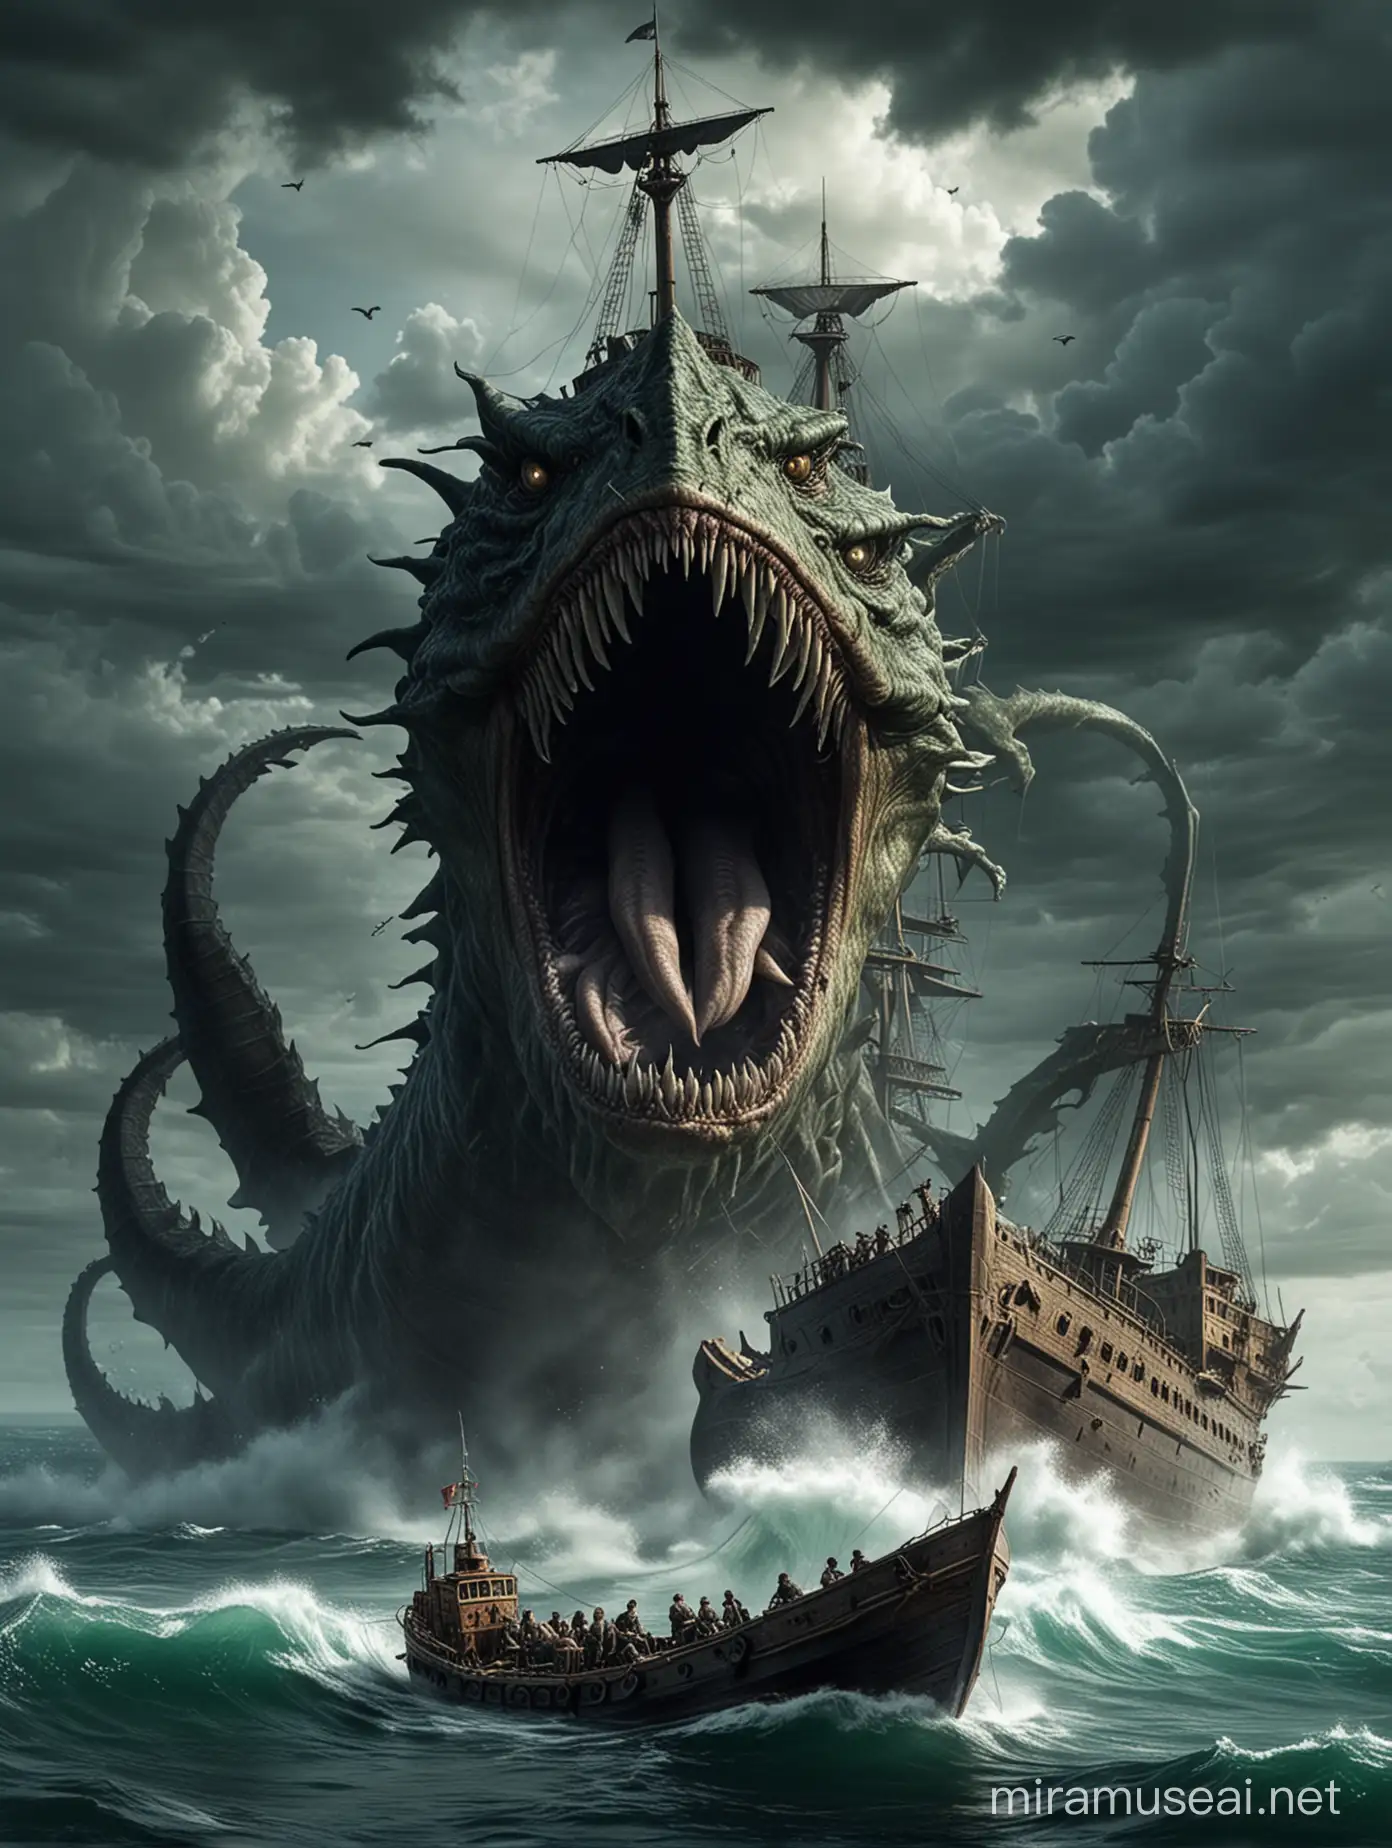 Gargantuan Sea Monster Devouring Ship in Furious Waters